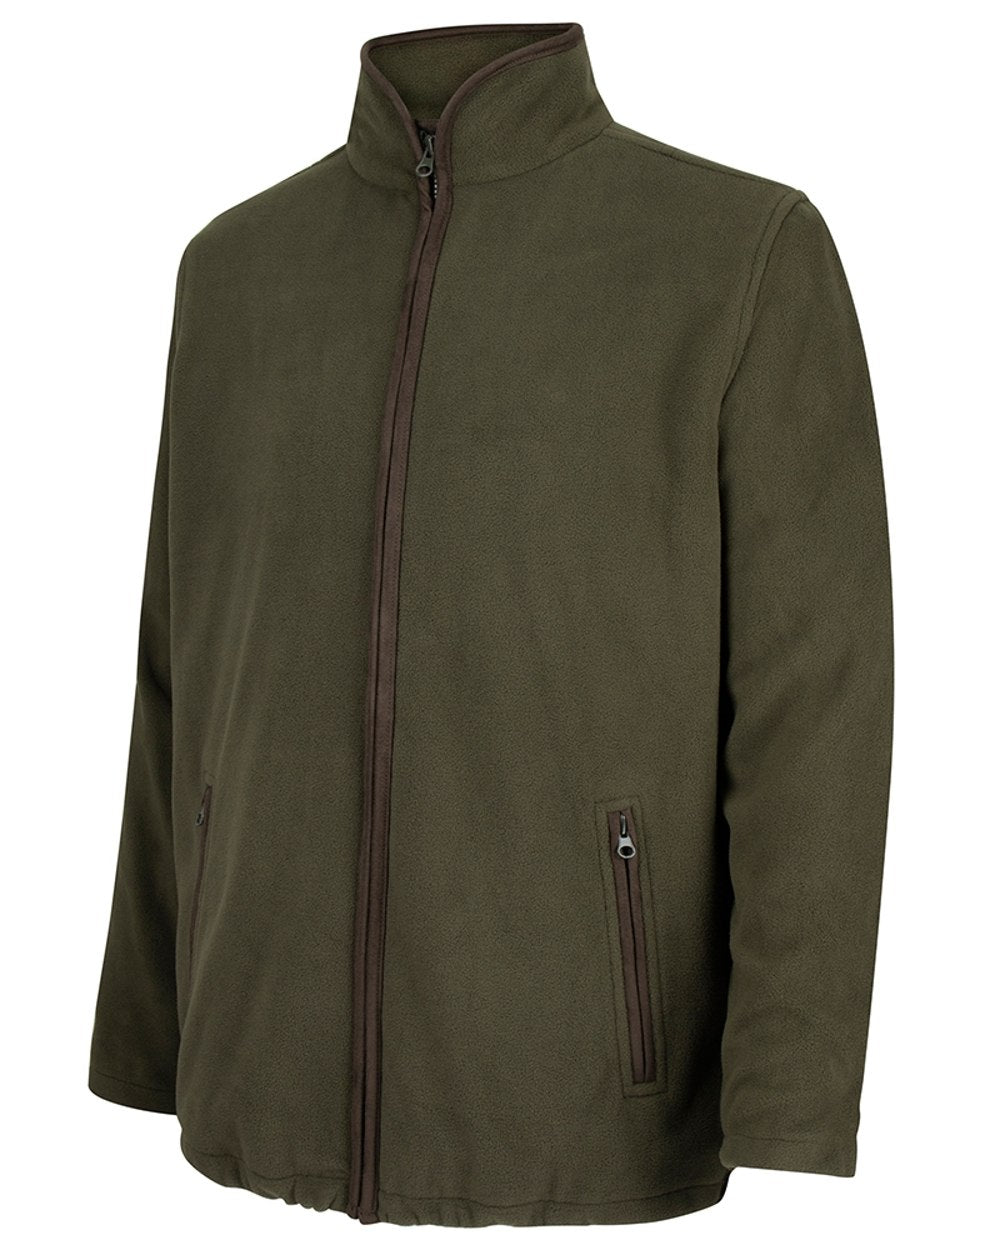 Hoggs of Fife Woodhall Fleece Jacket in Green 